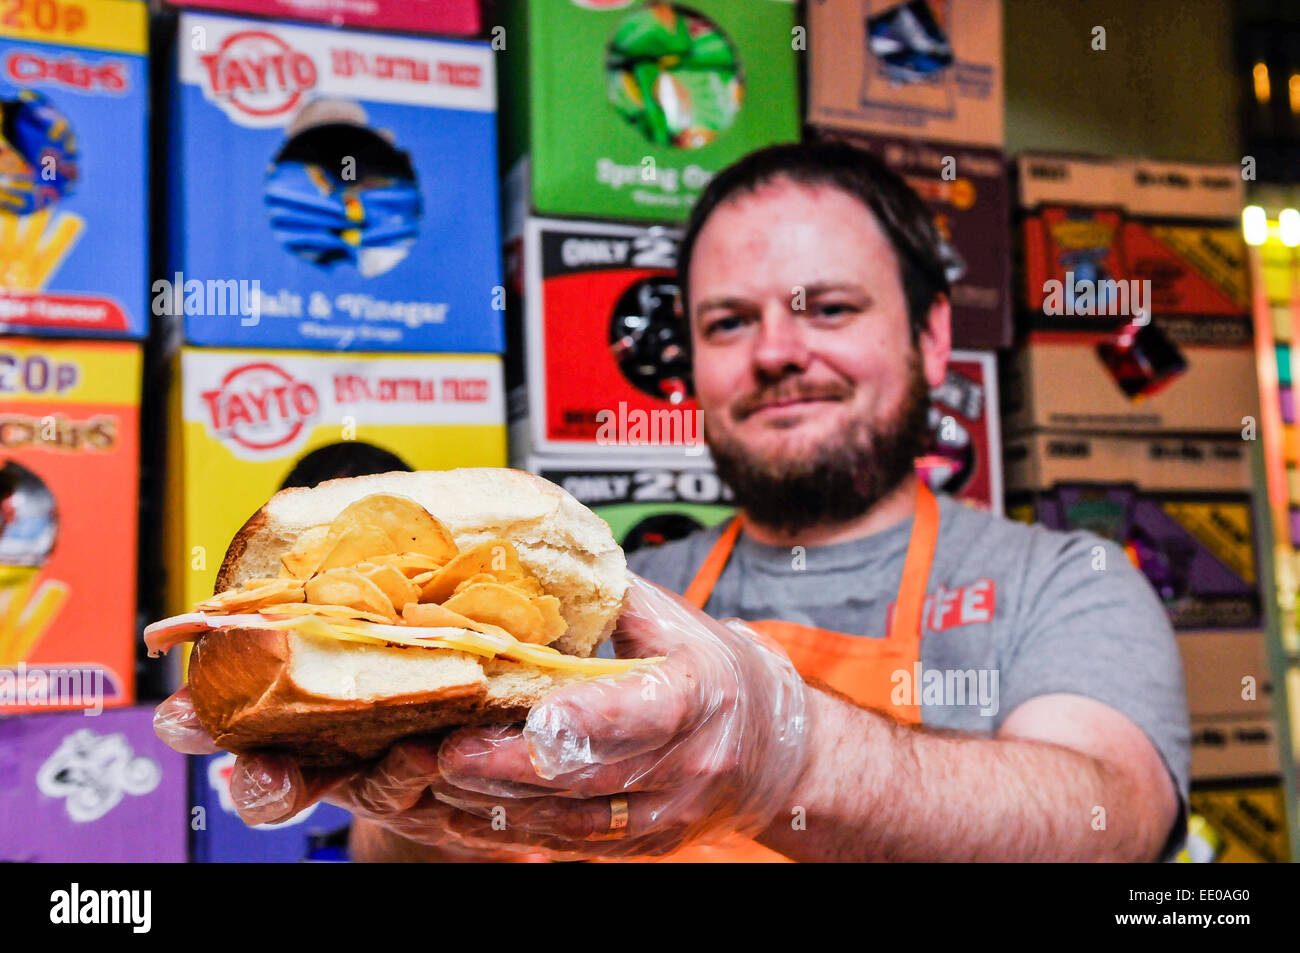 Belfast, Nordirland. 12. Januar 2015. Café-Besitzer Andrew McMenamin öffnet die weltweit erste "Knackig Sandwich" Café Credit: Stephen Barnes/Alamy Live News Stockfoto